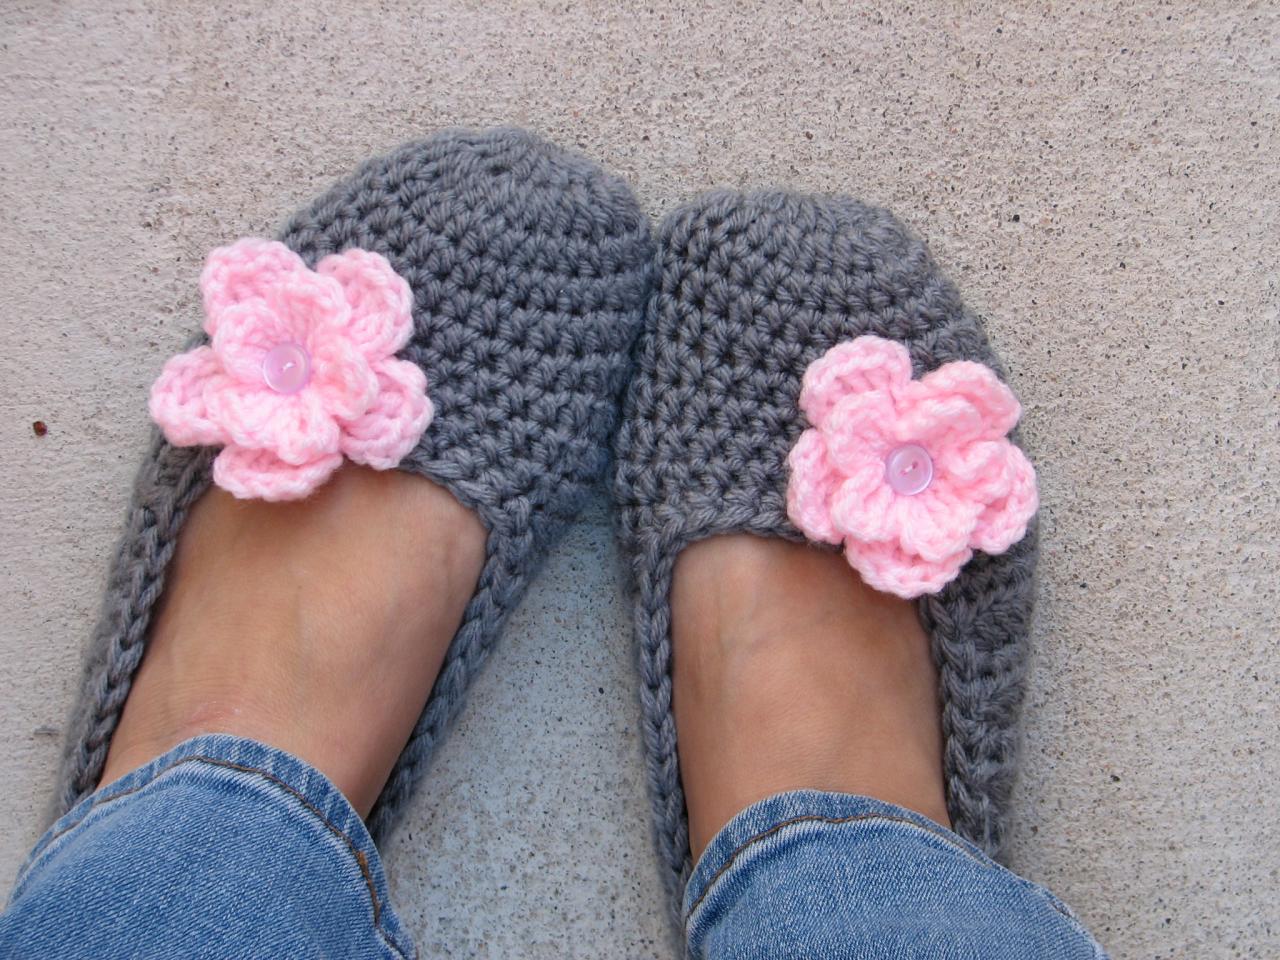 Crochet Women Slippers - Grey With Pink Flower, Accessories, Adult Crochet Slippers, Home Shoes, Crochet Women Slippers